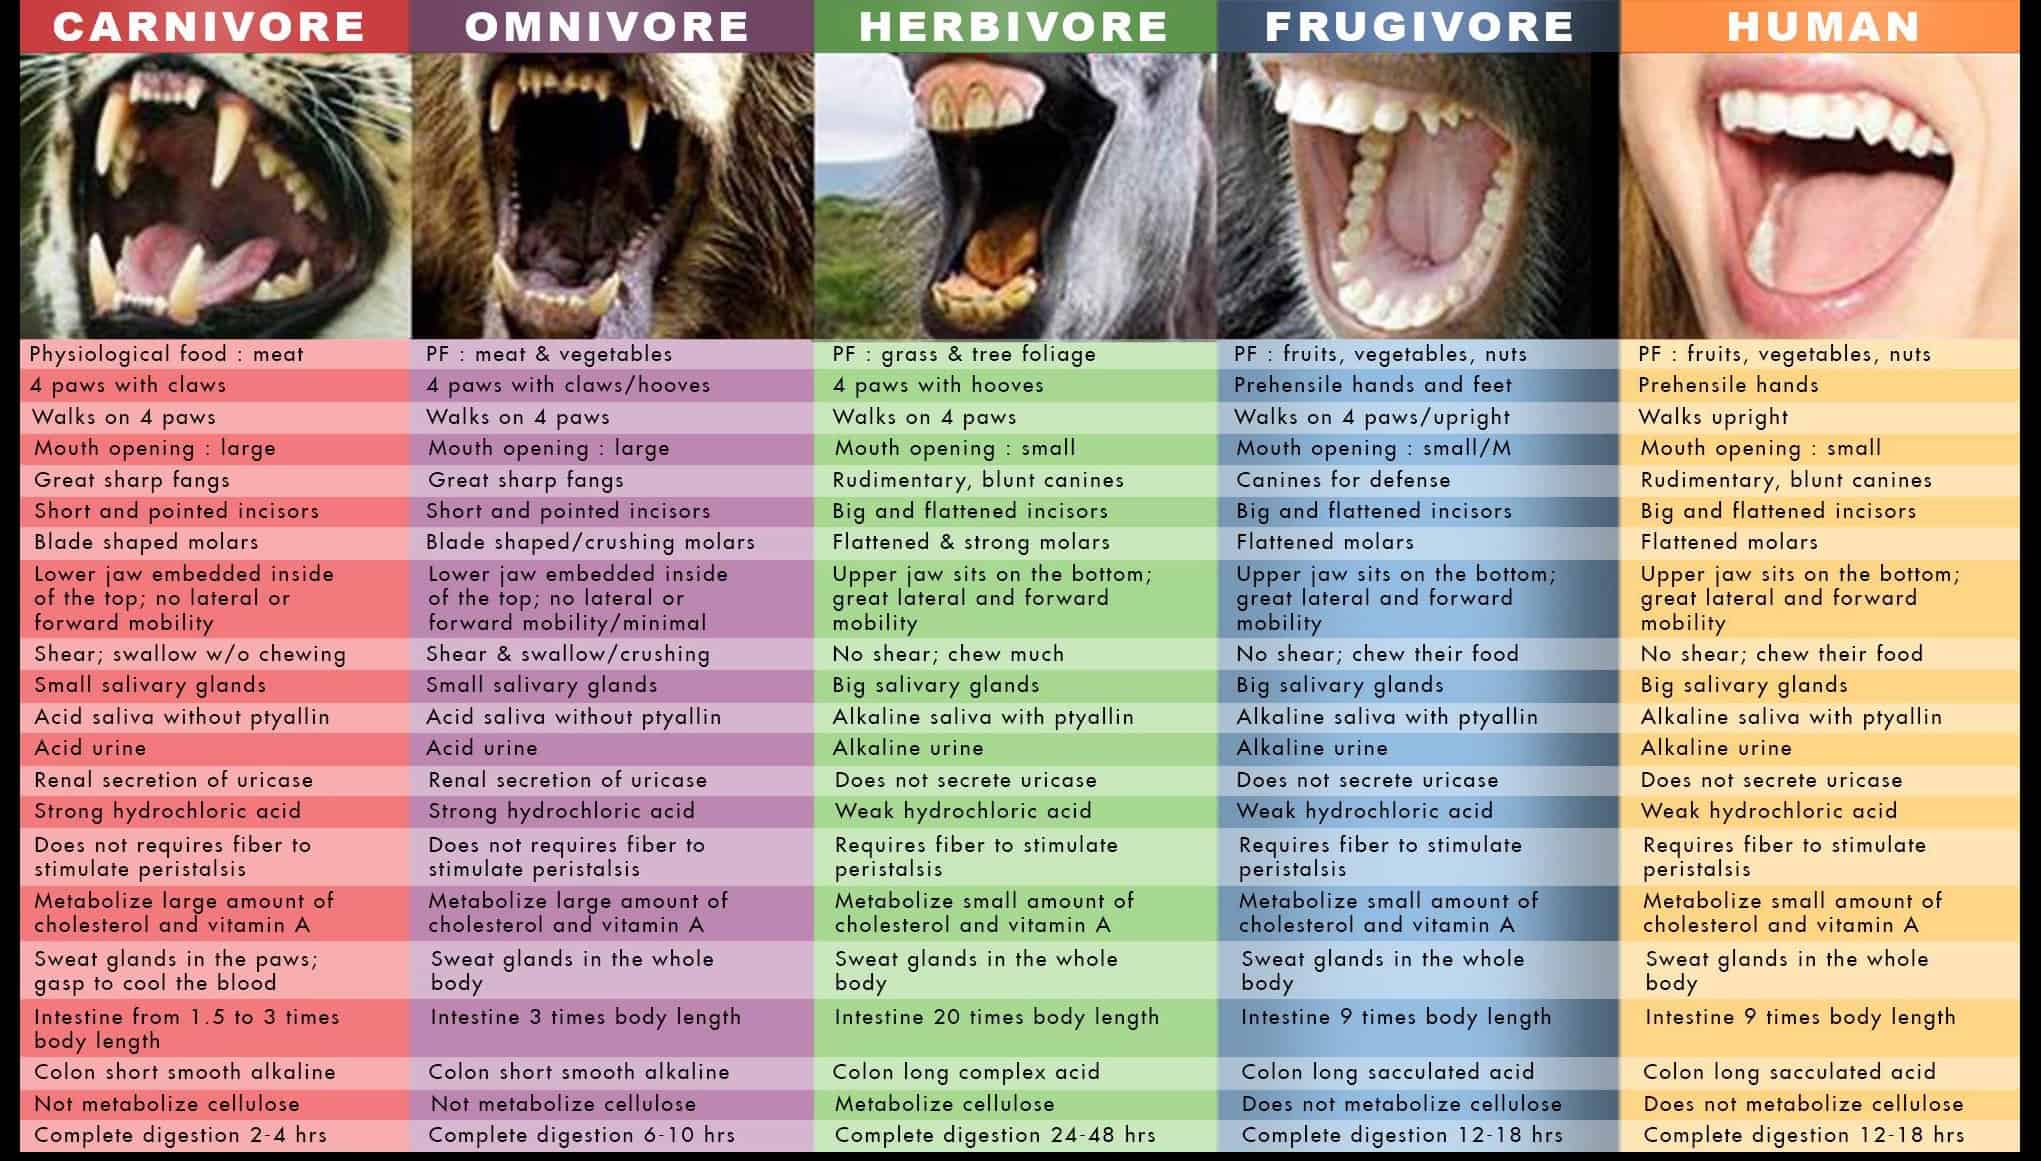 carnivores teeth